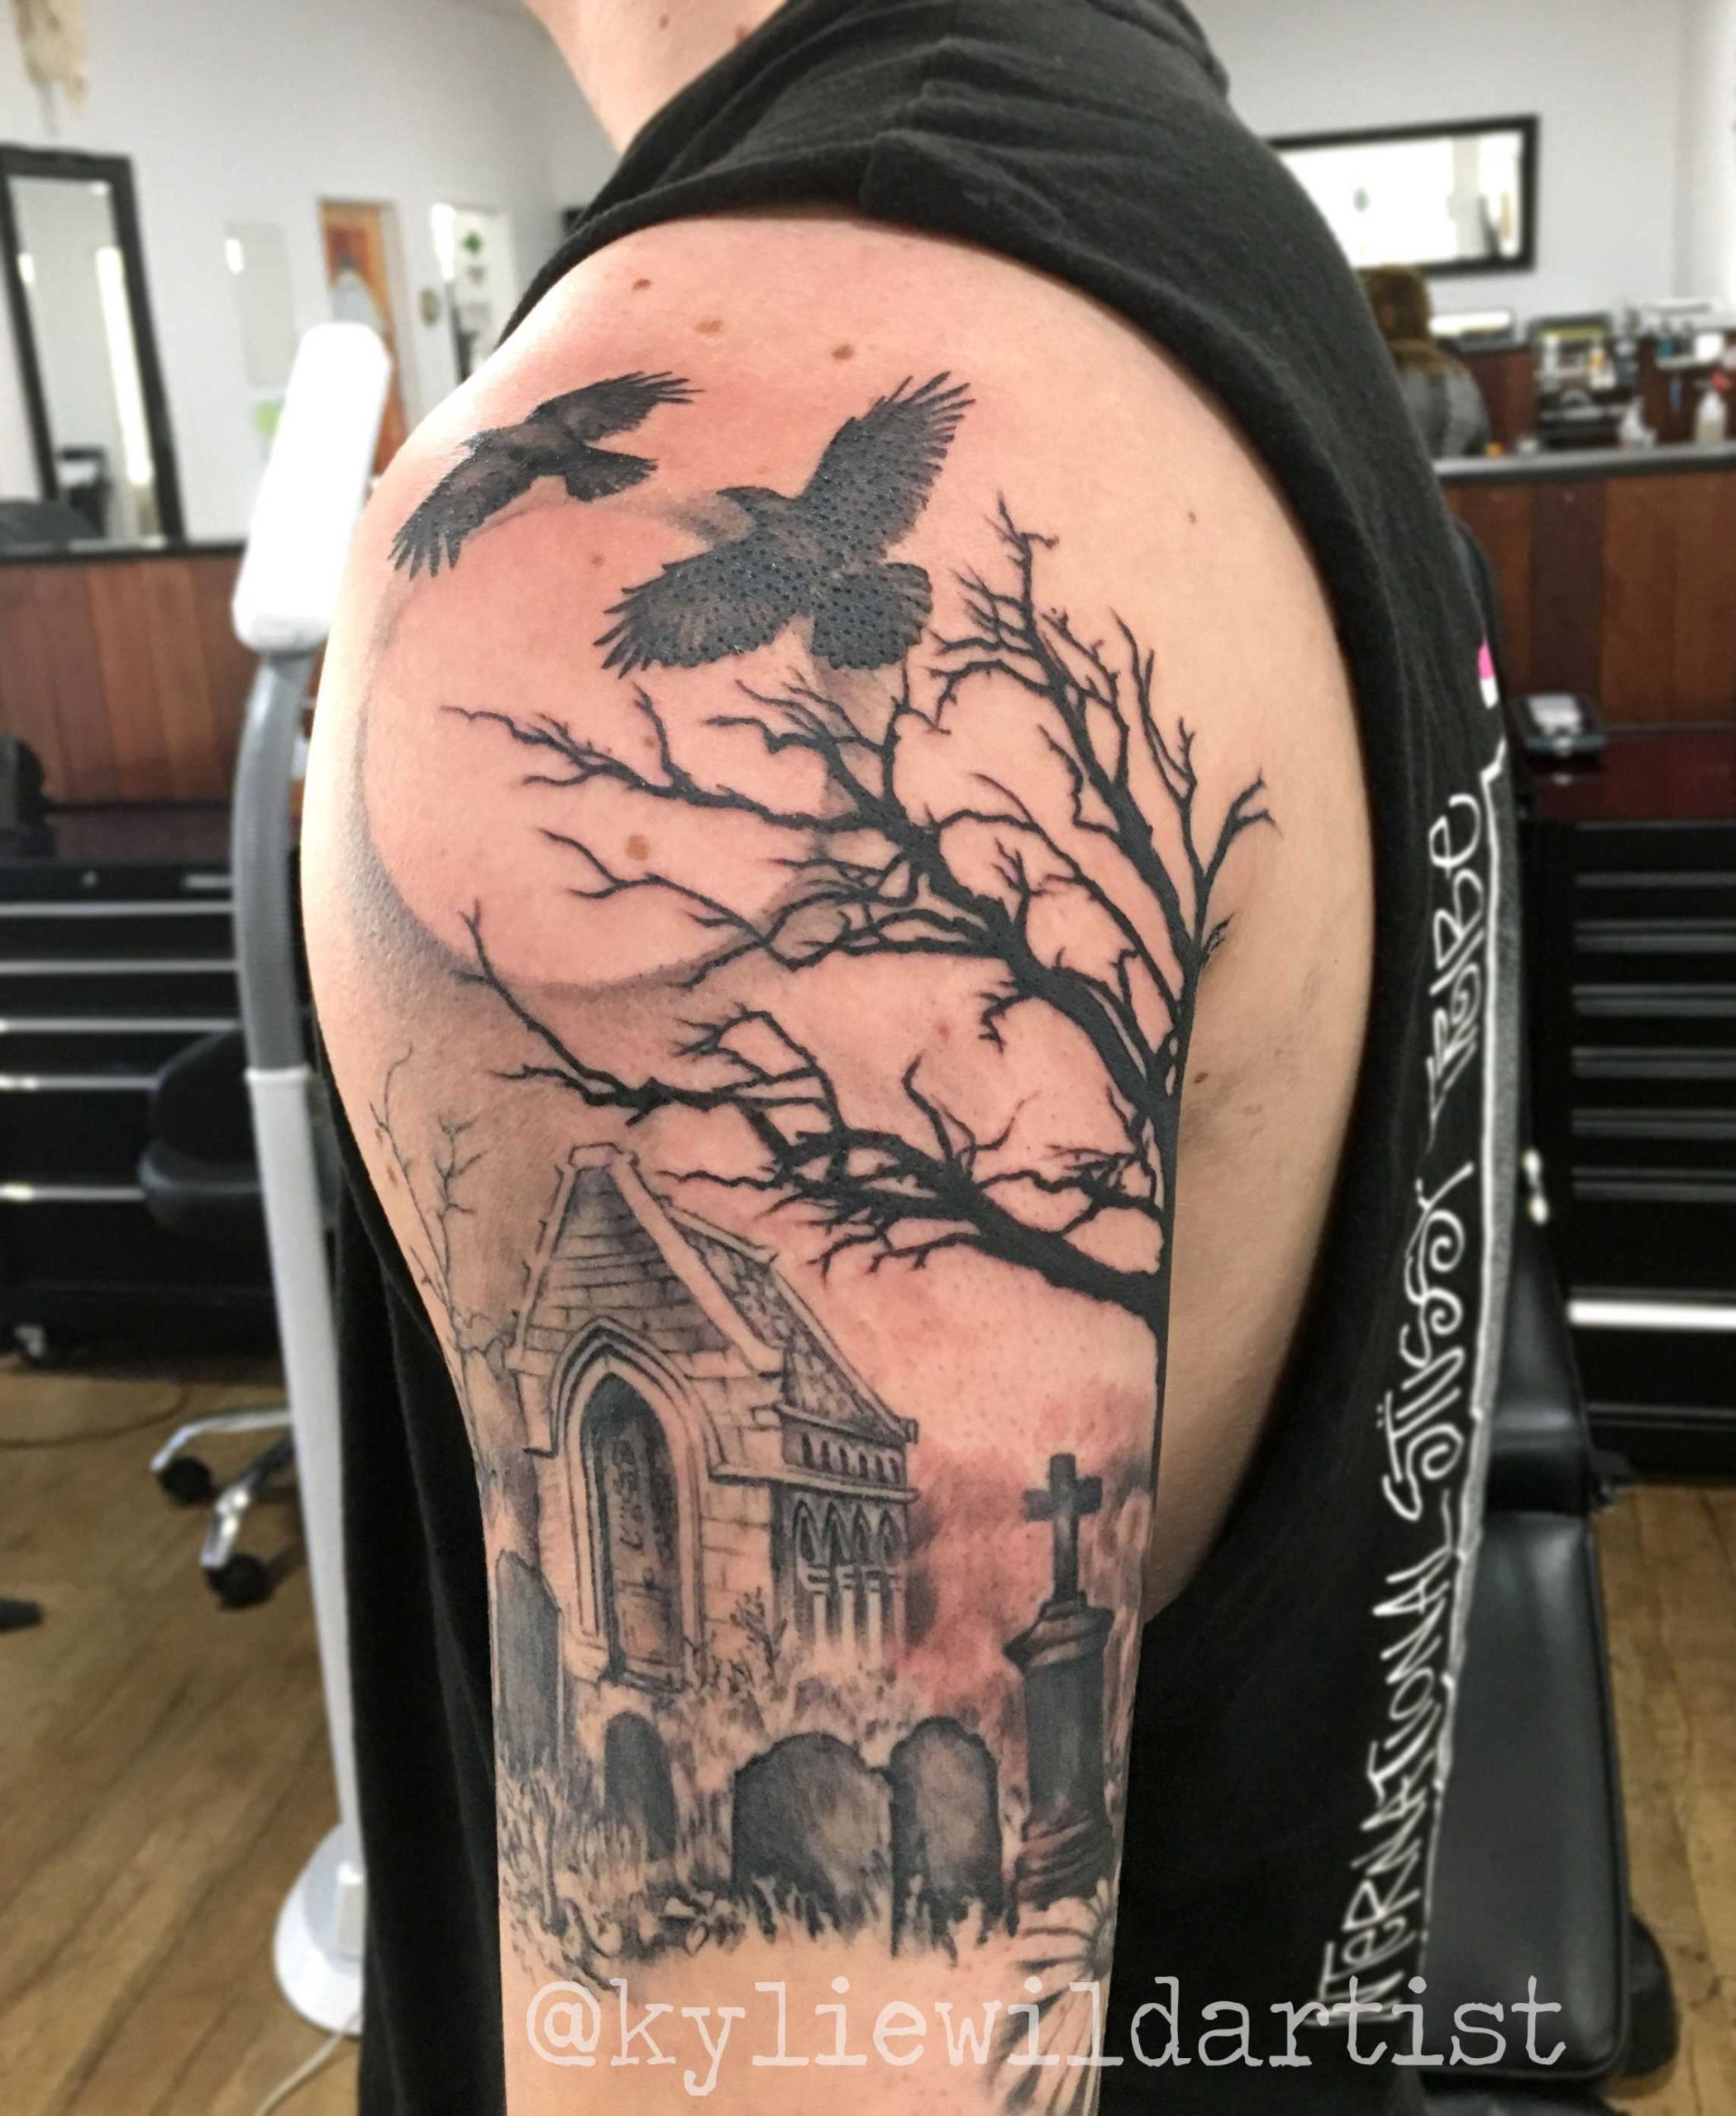 Graveyard, tree, crows, moon, tombstones, tattoo sleeve in